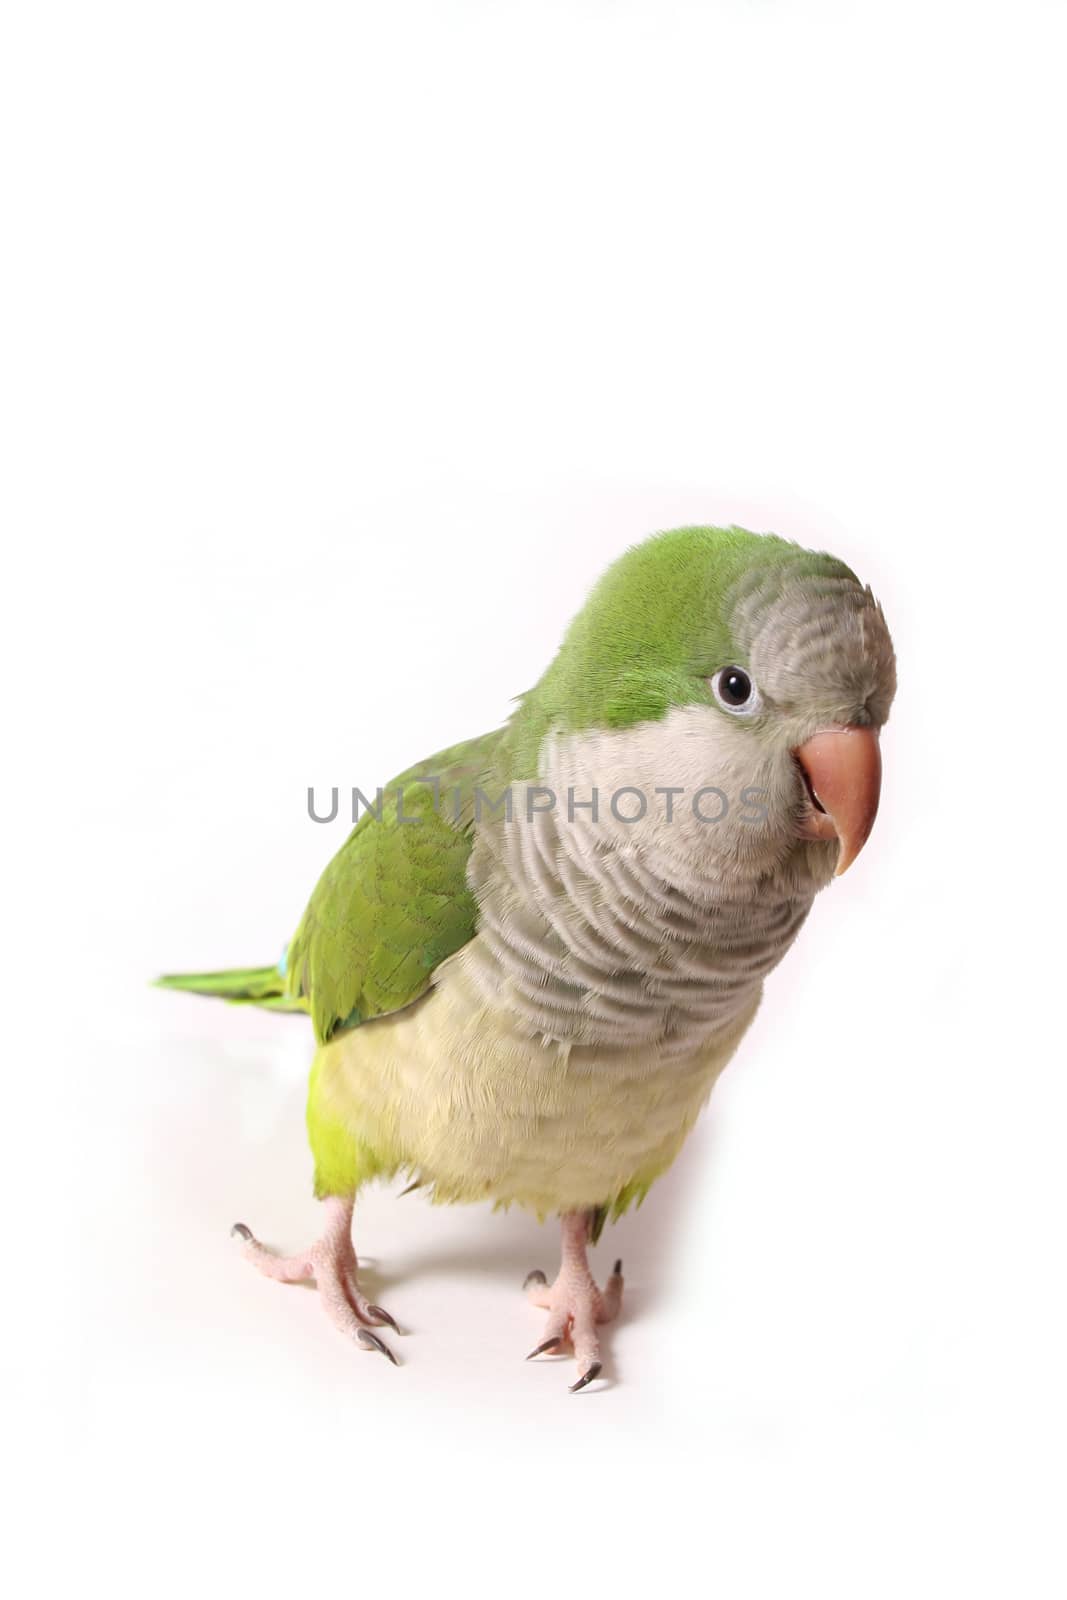 Quaker Parrot by Marti157900